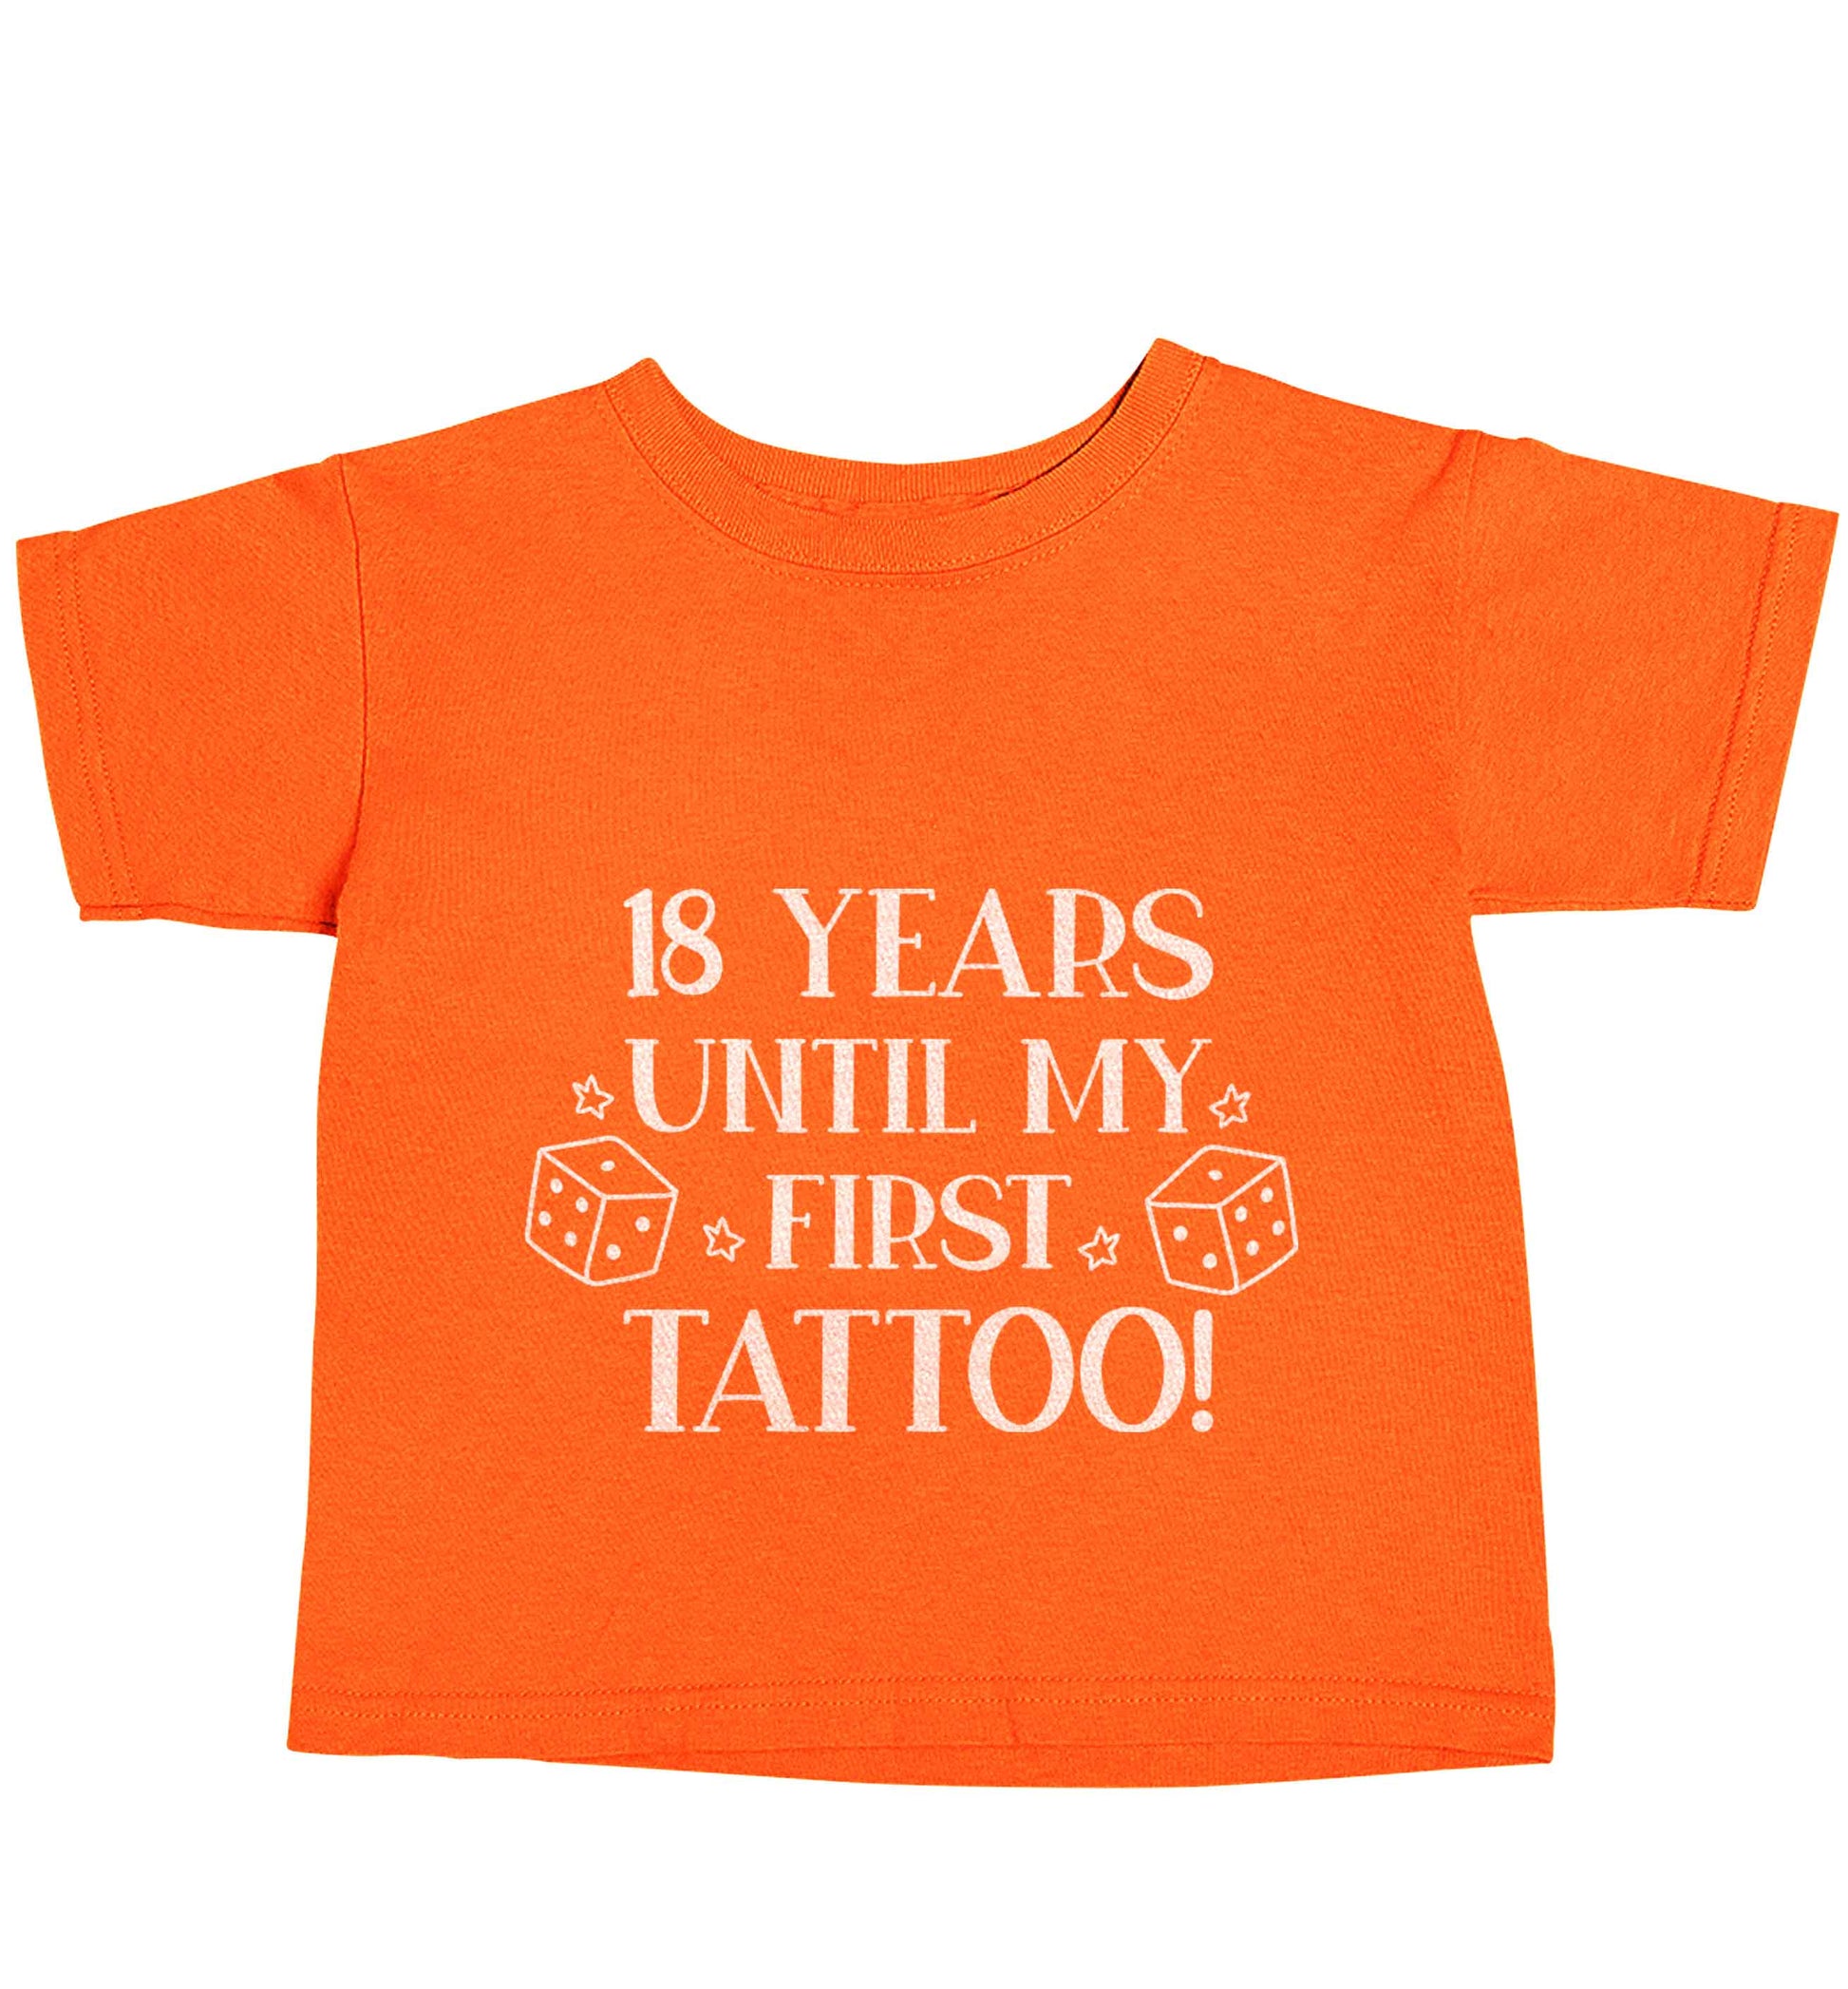 18 Years Until my First Tattoo orange baby toddler Tshirt 2 Years